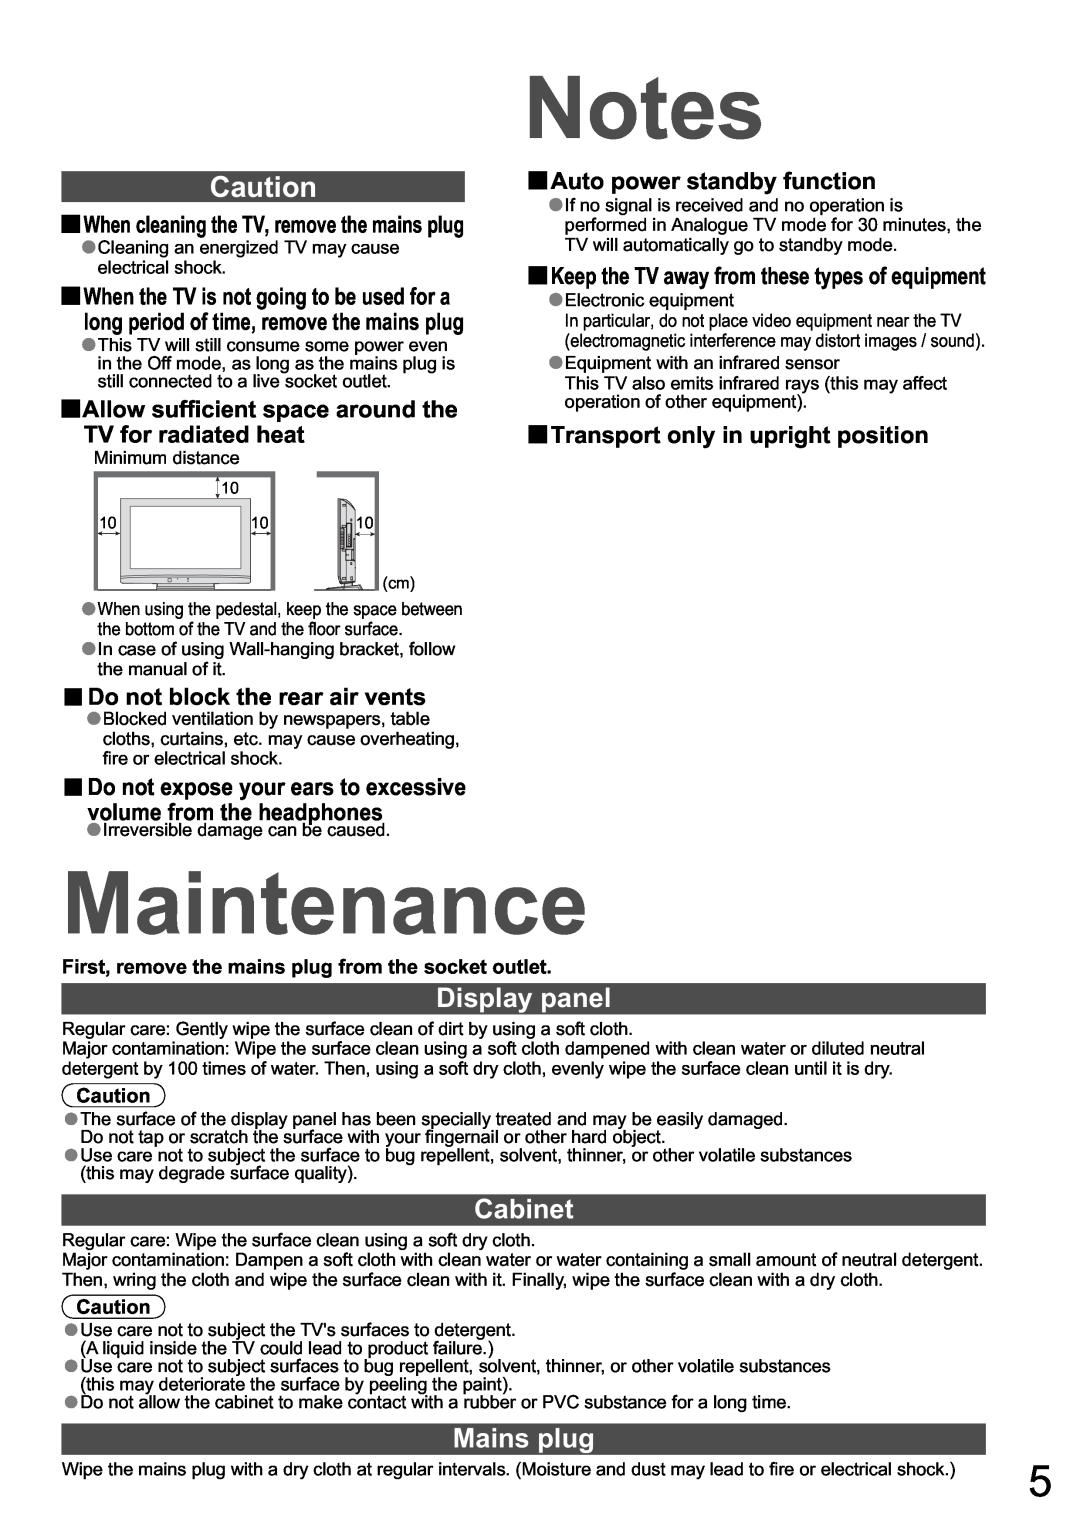 Panasonic TX-32LXD8A manual Maintenance, Display panel, Cabinet, Mains plug, Do not block the rear air vents 